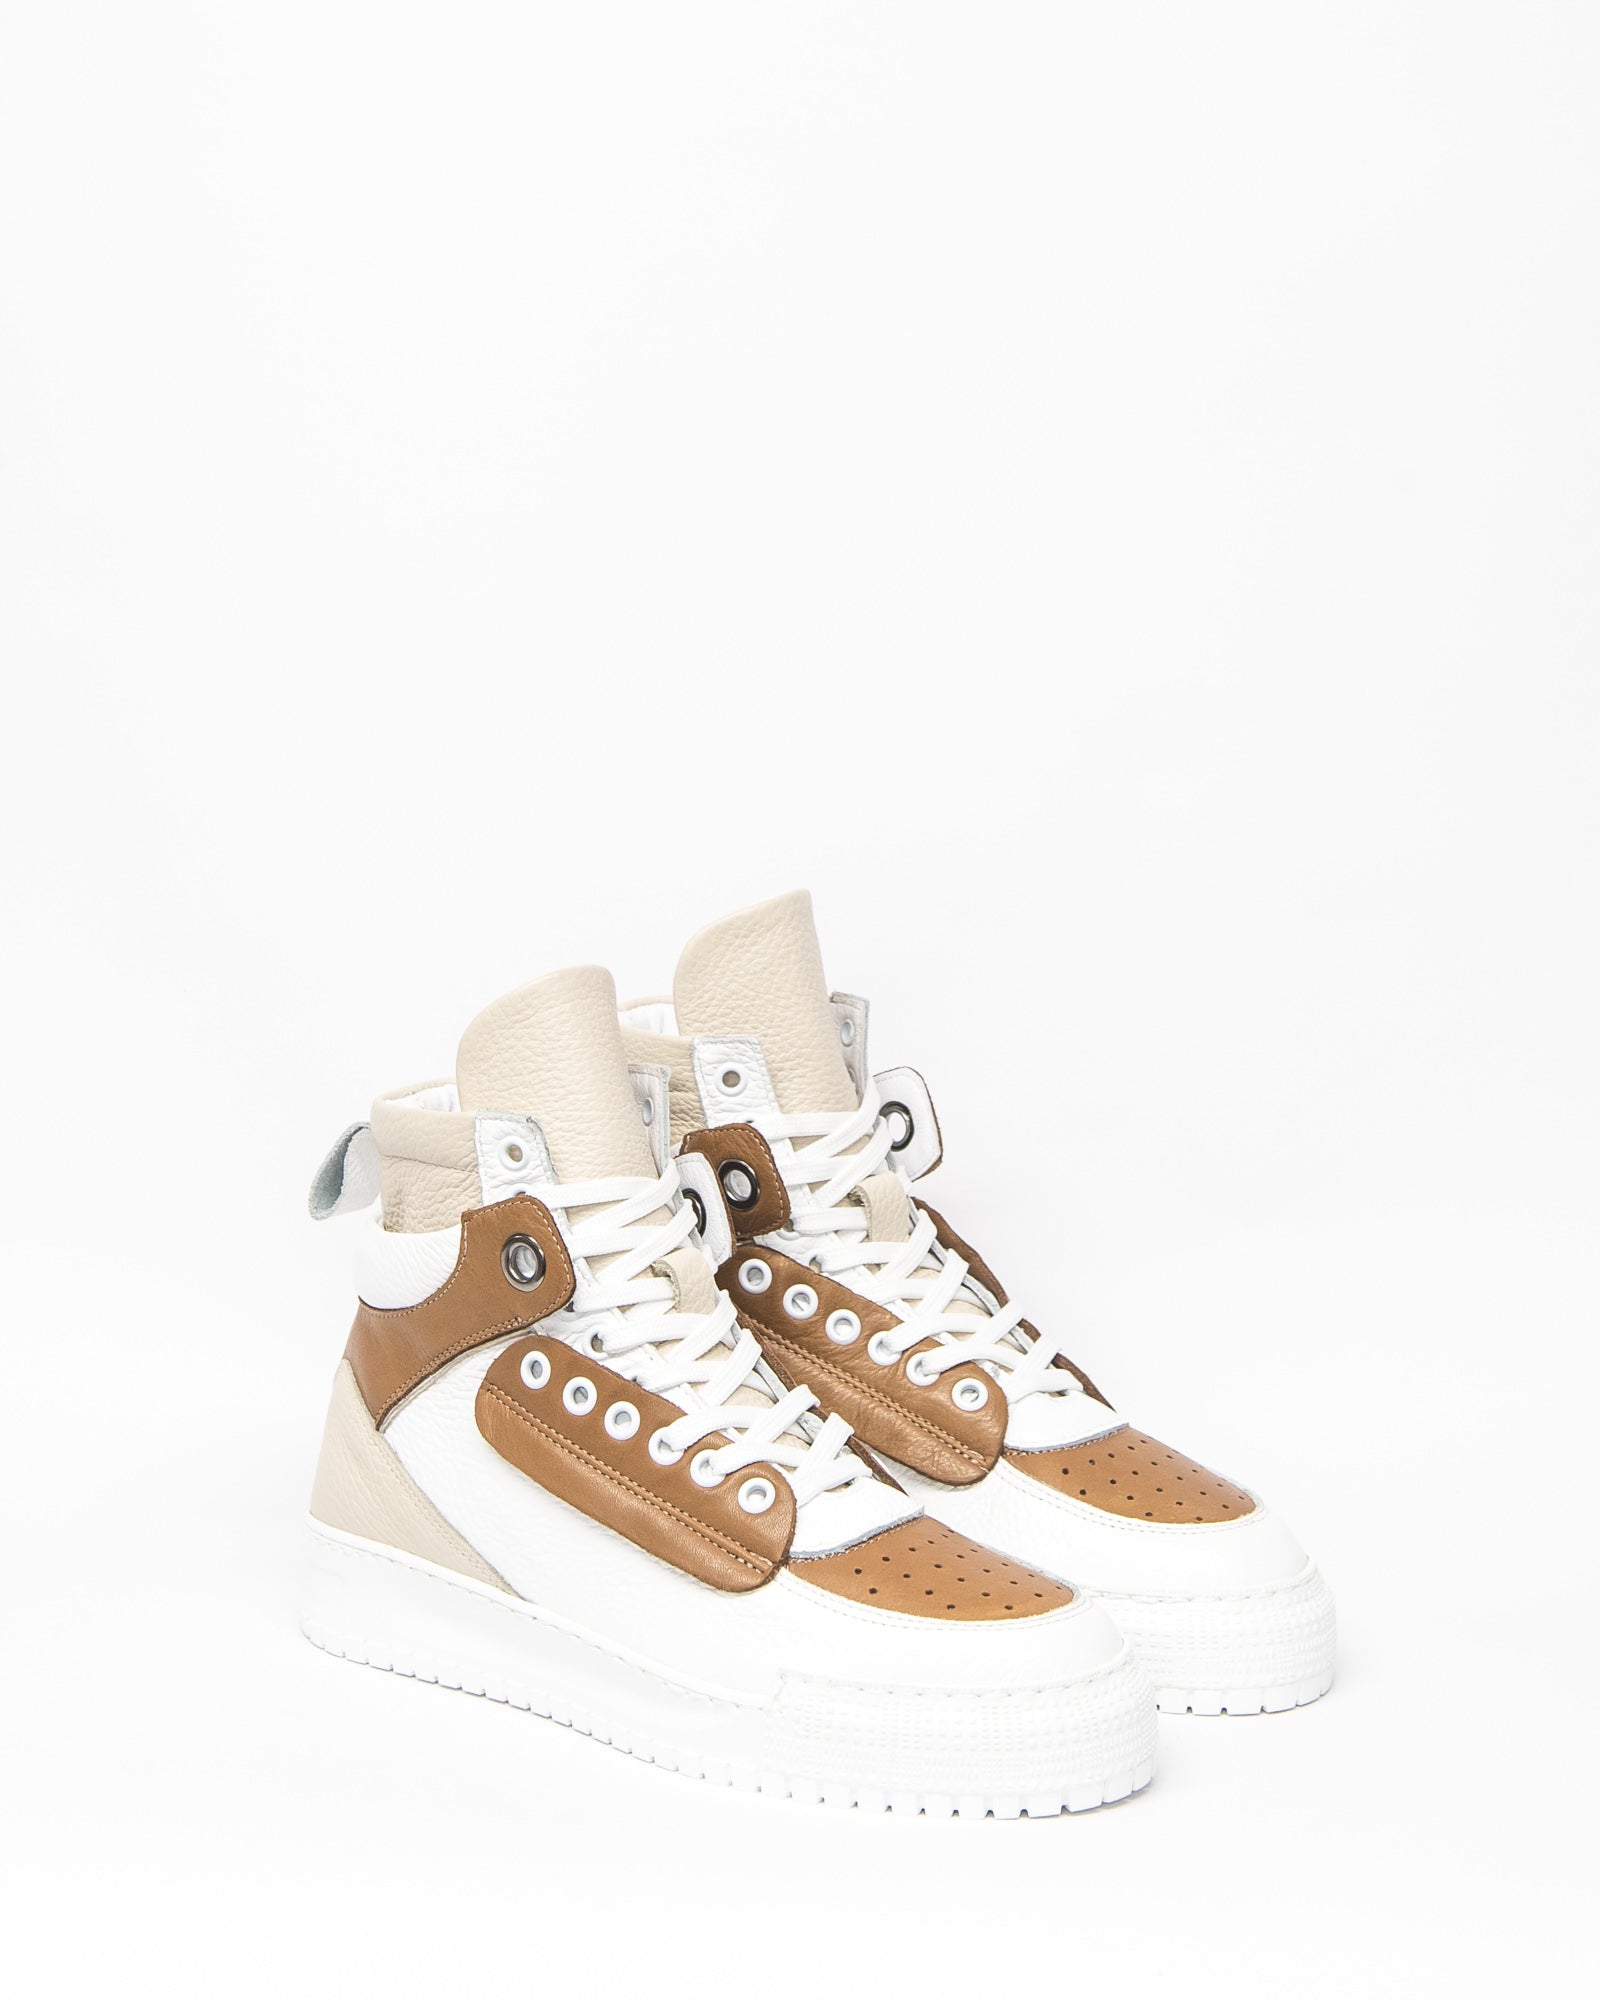 vibe sneaker - mocha/white leather